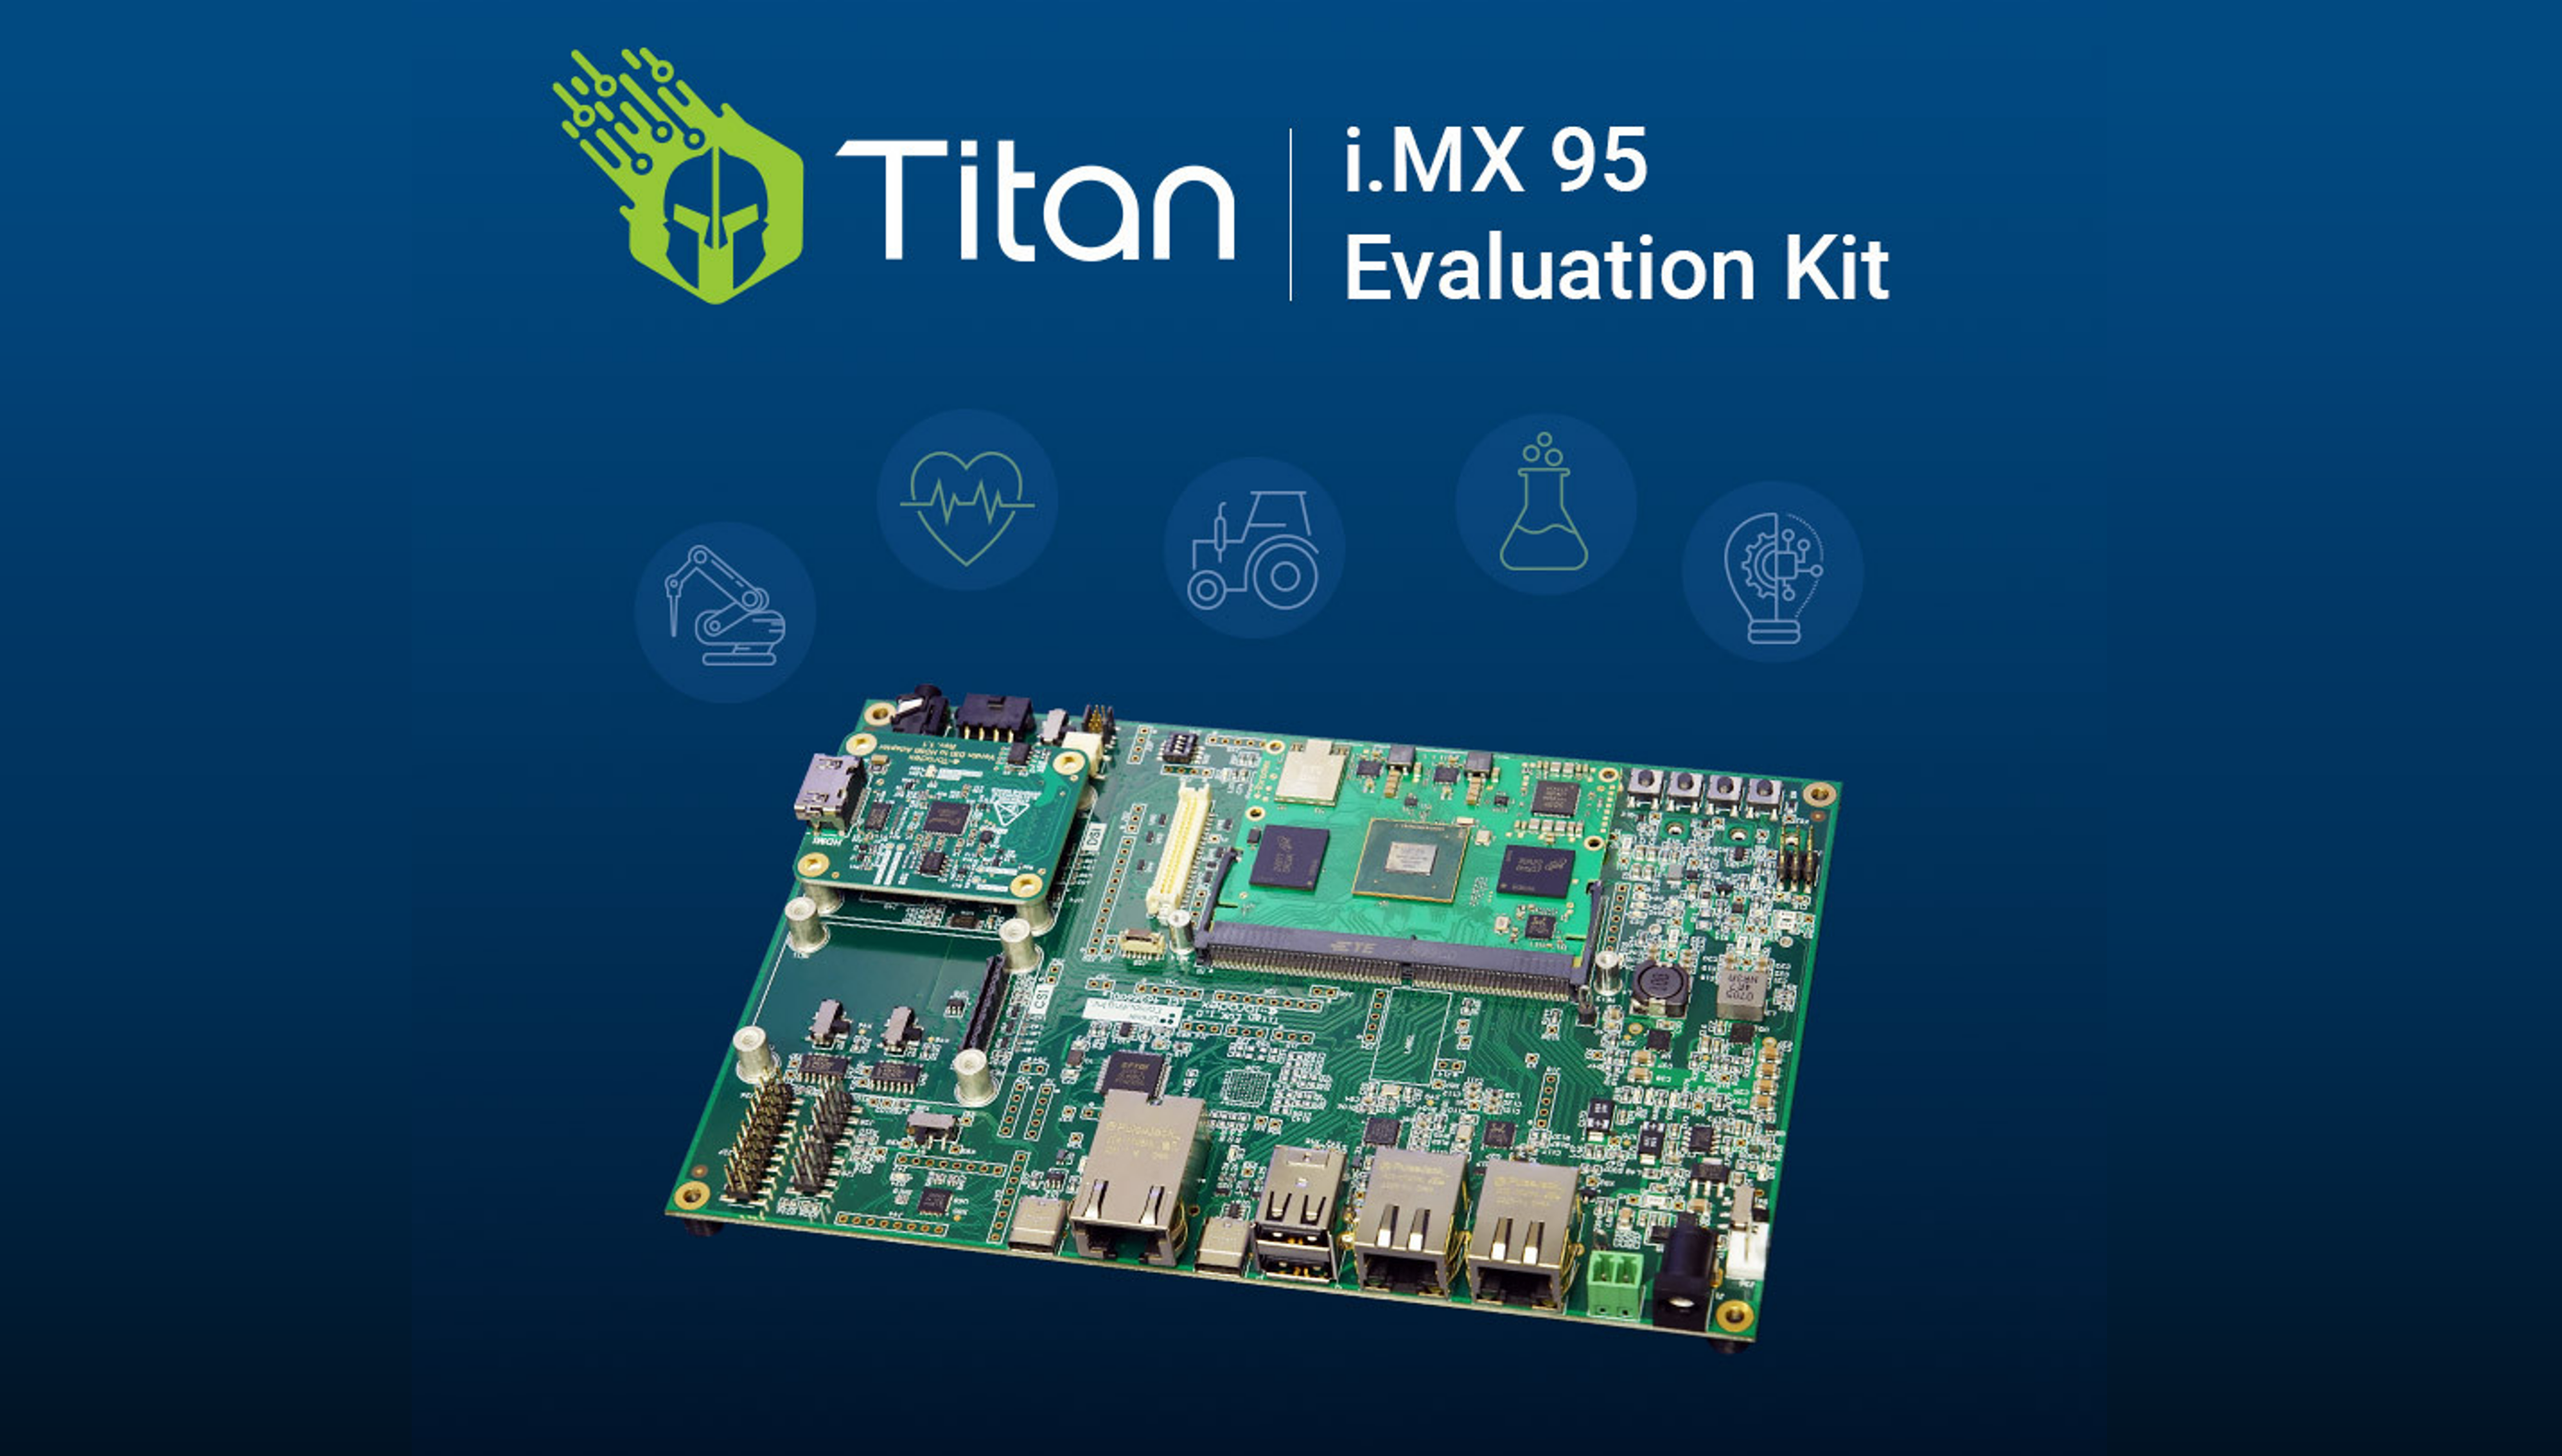 i.MX95 Titan 評価キットのアーリーアクセス提供開始